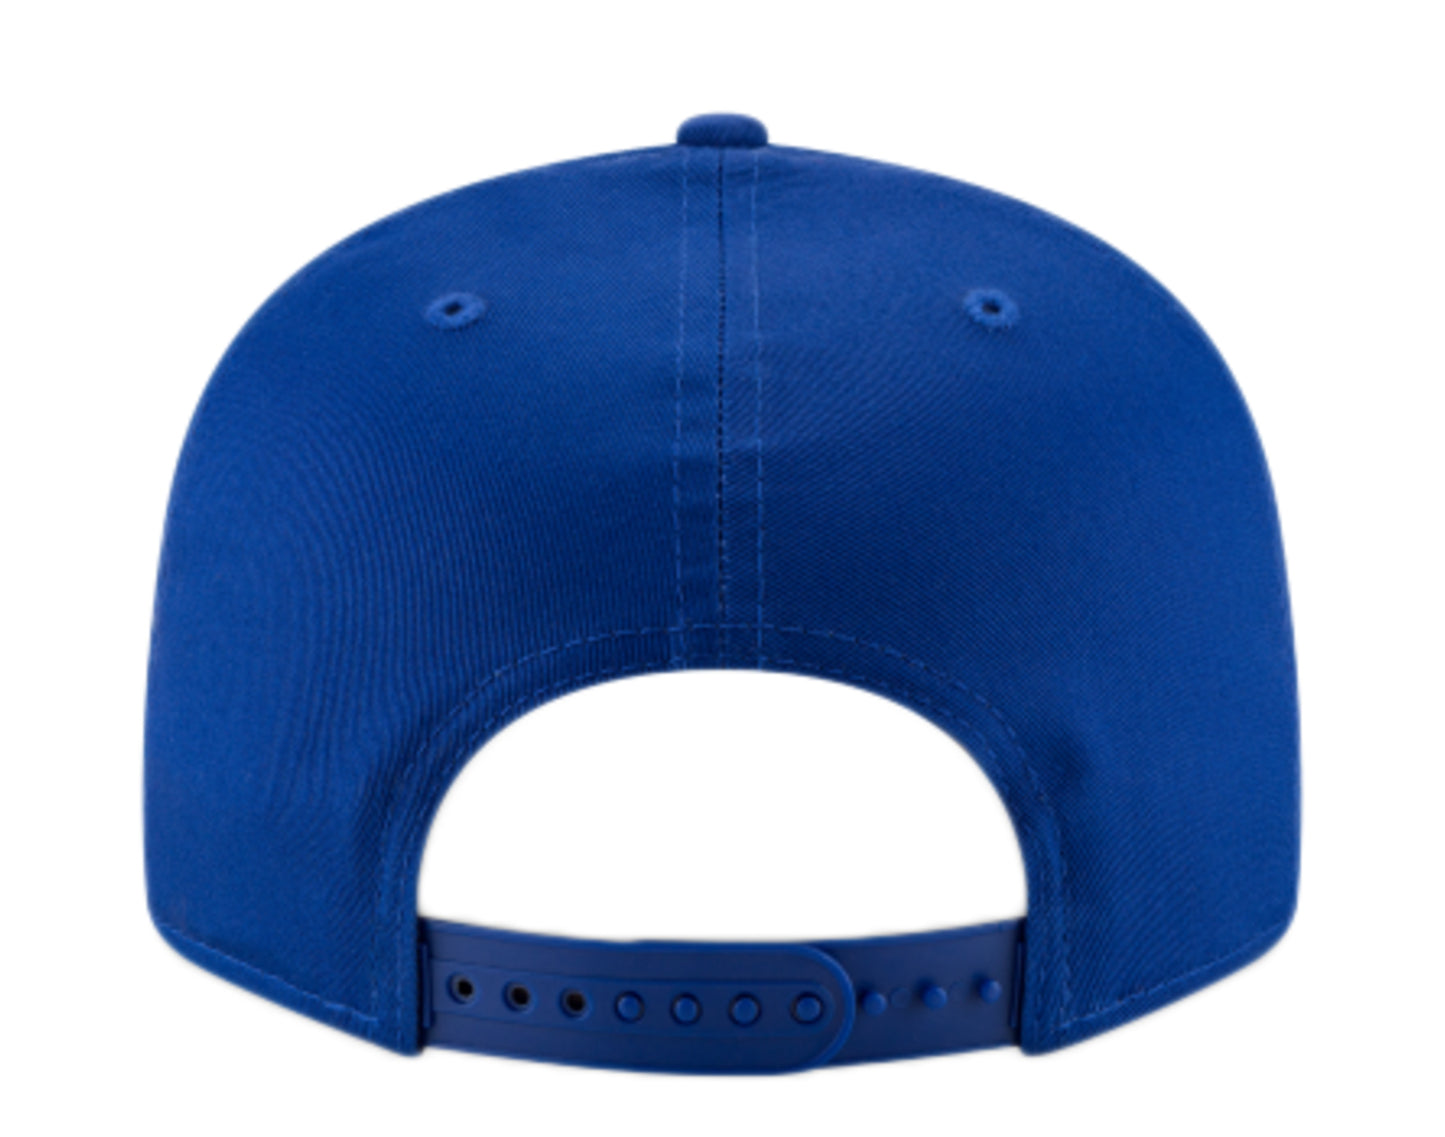 New Era 9Fifty NFL Denver Broncos Basic Snapback Hat